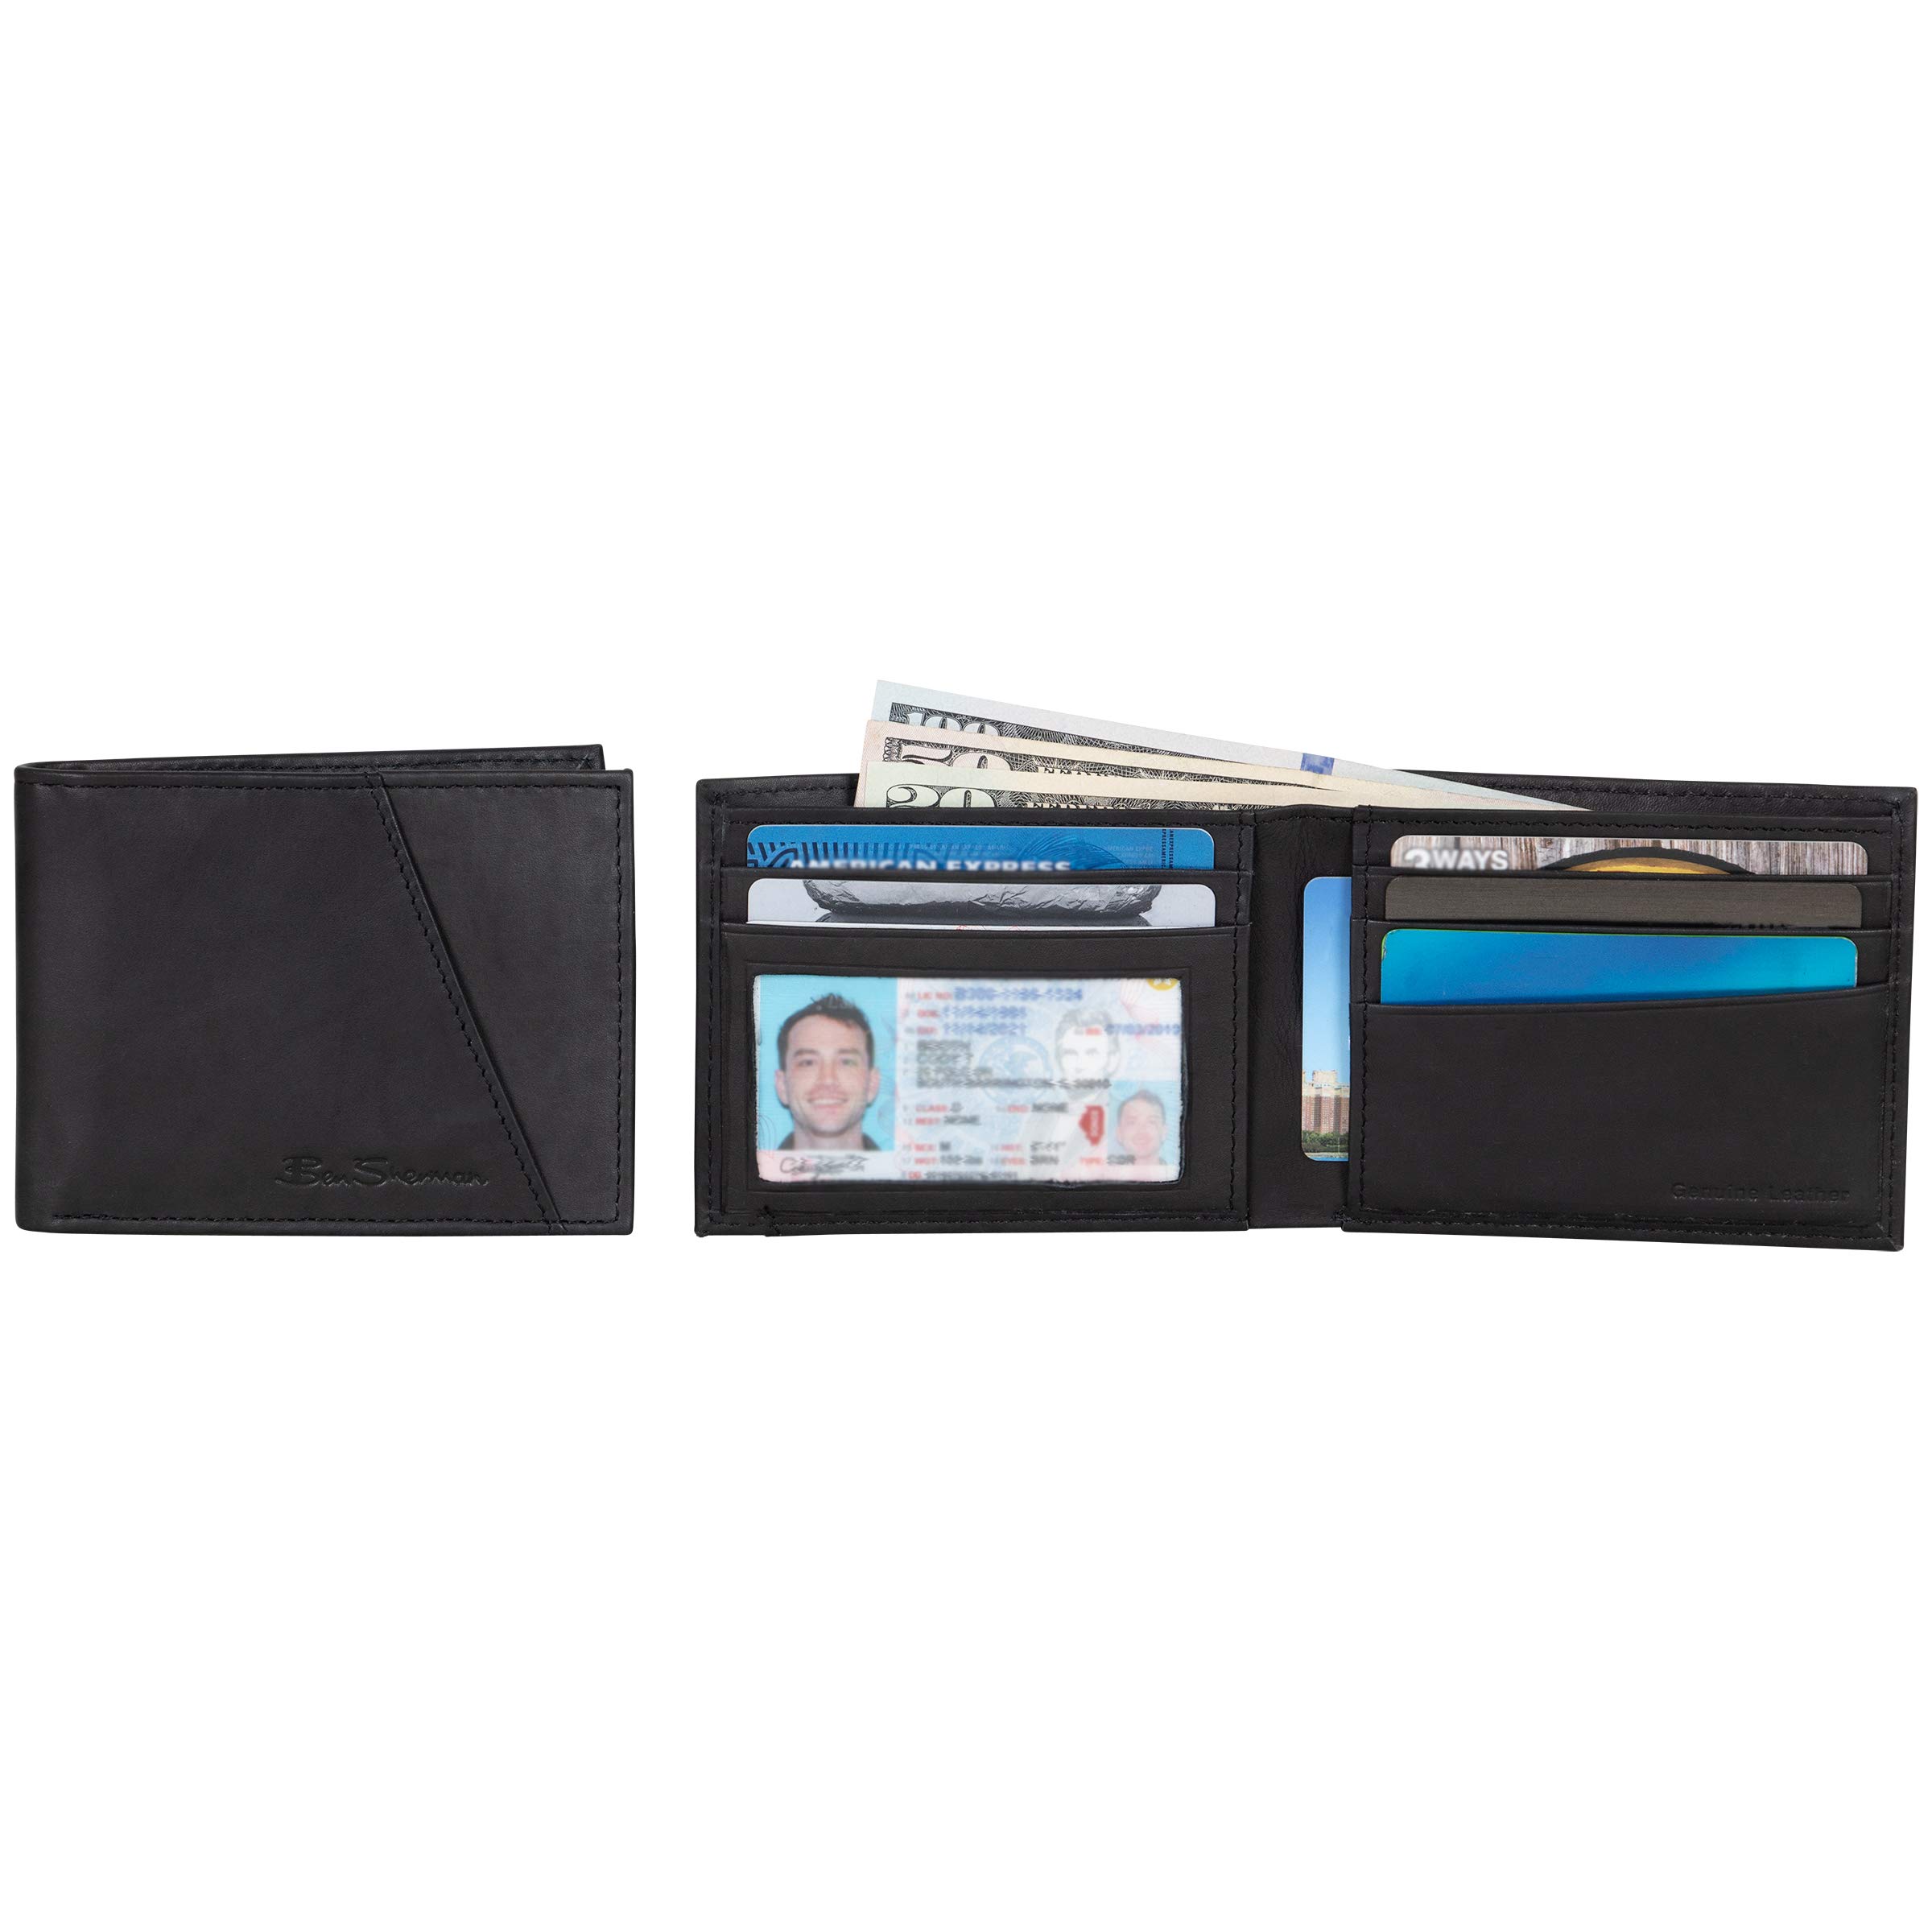 Ben Sherman Men's Manchester Bifold Slim Wallet Full-Grain Leather RFID Minimalist Gift Box